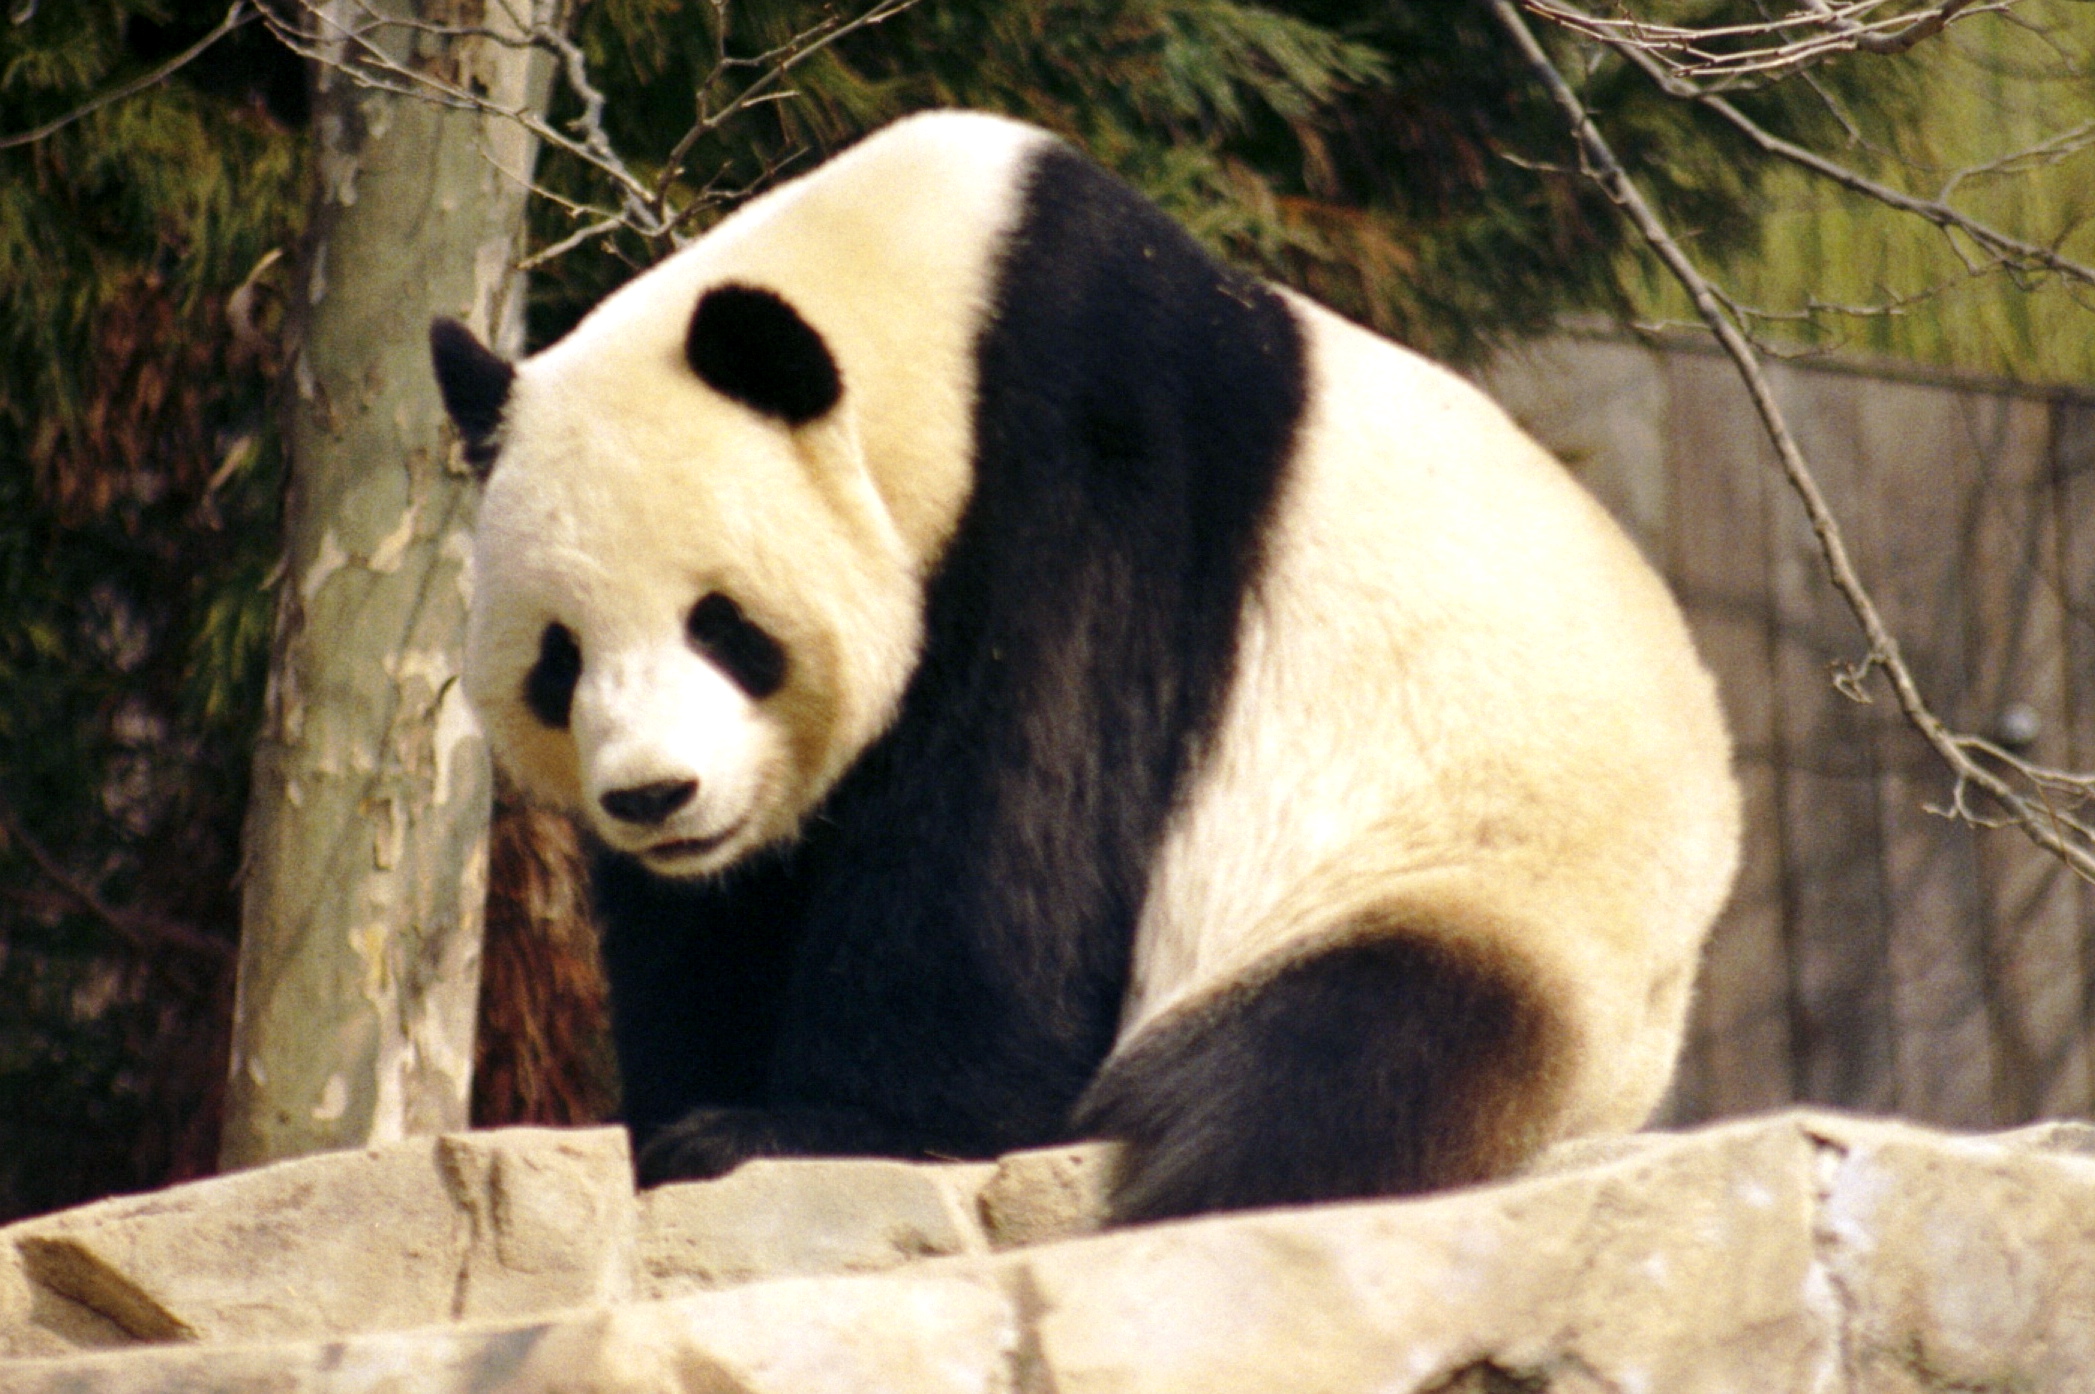 Threatened by a hug – endangered giant panda bites man | Nature's ...